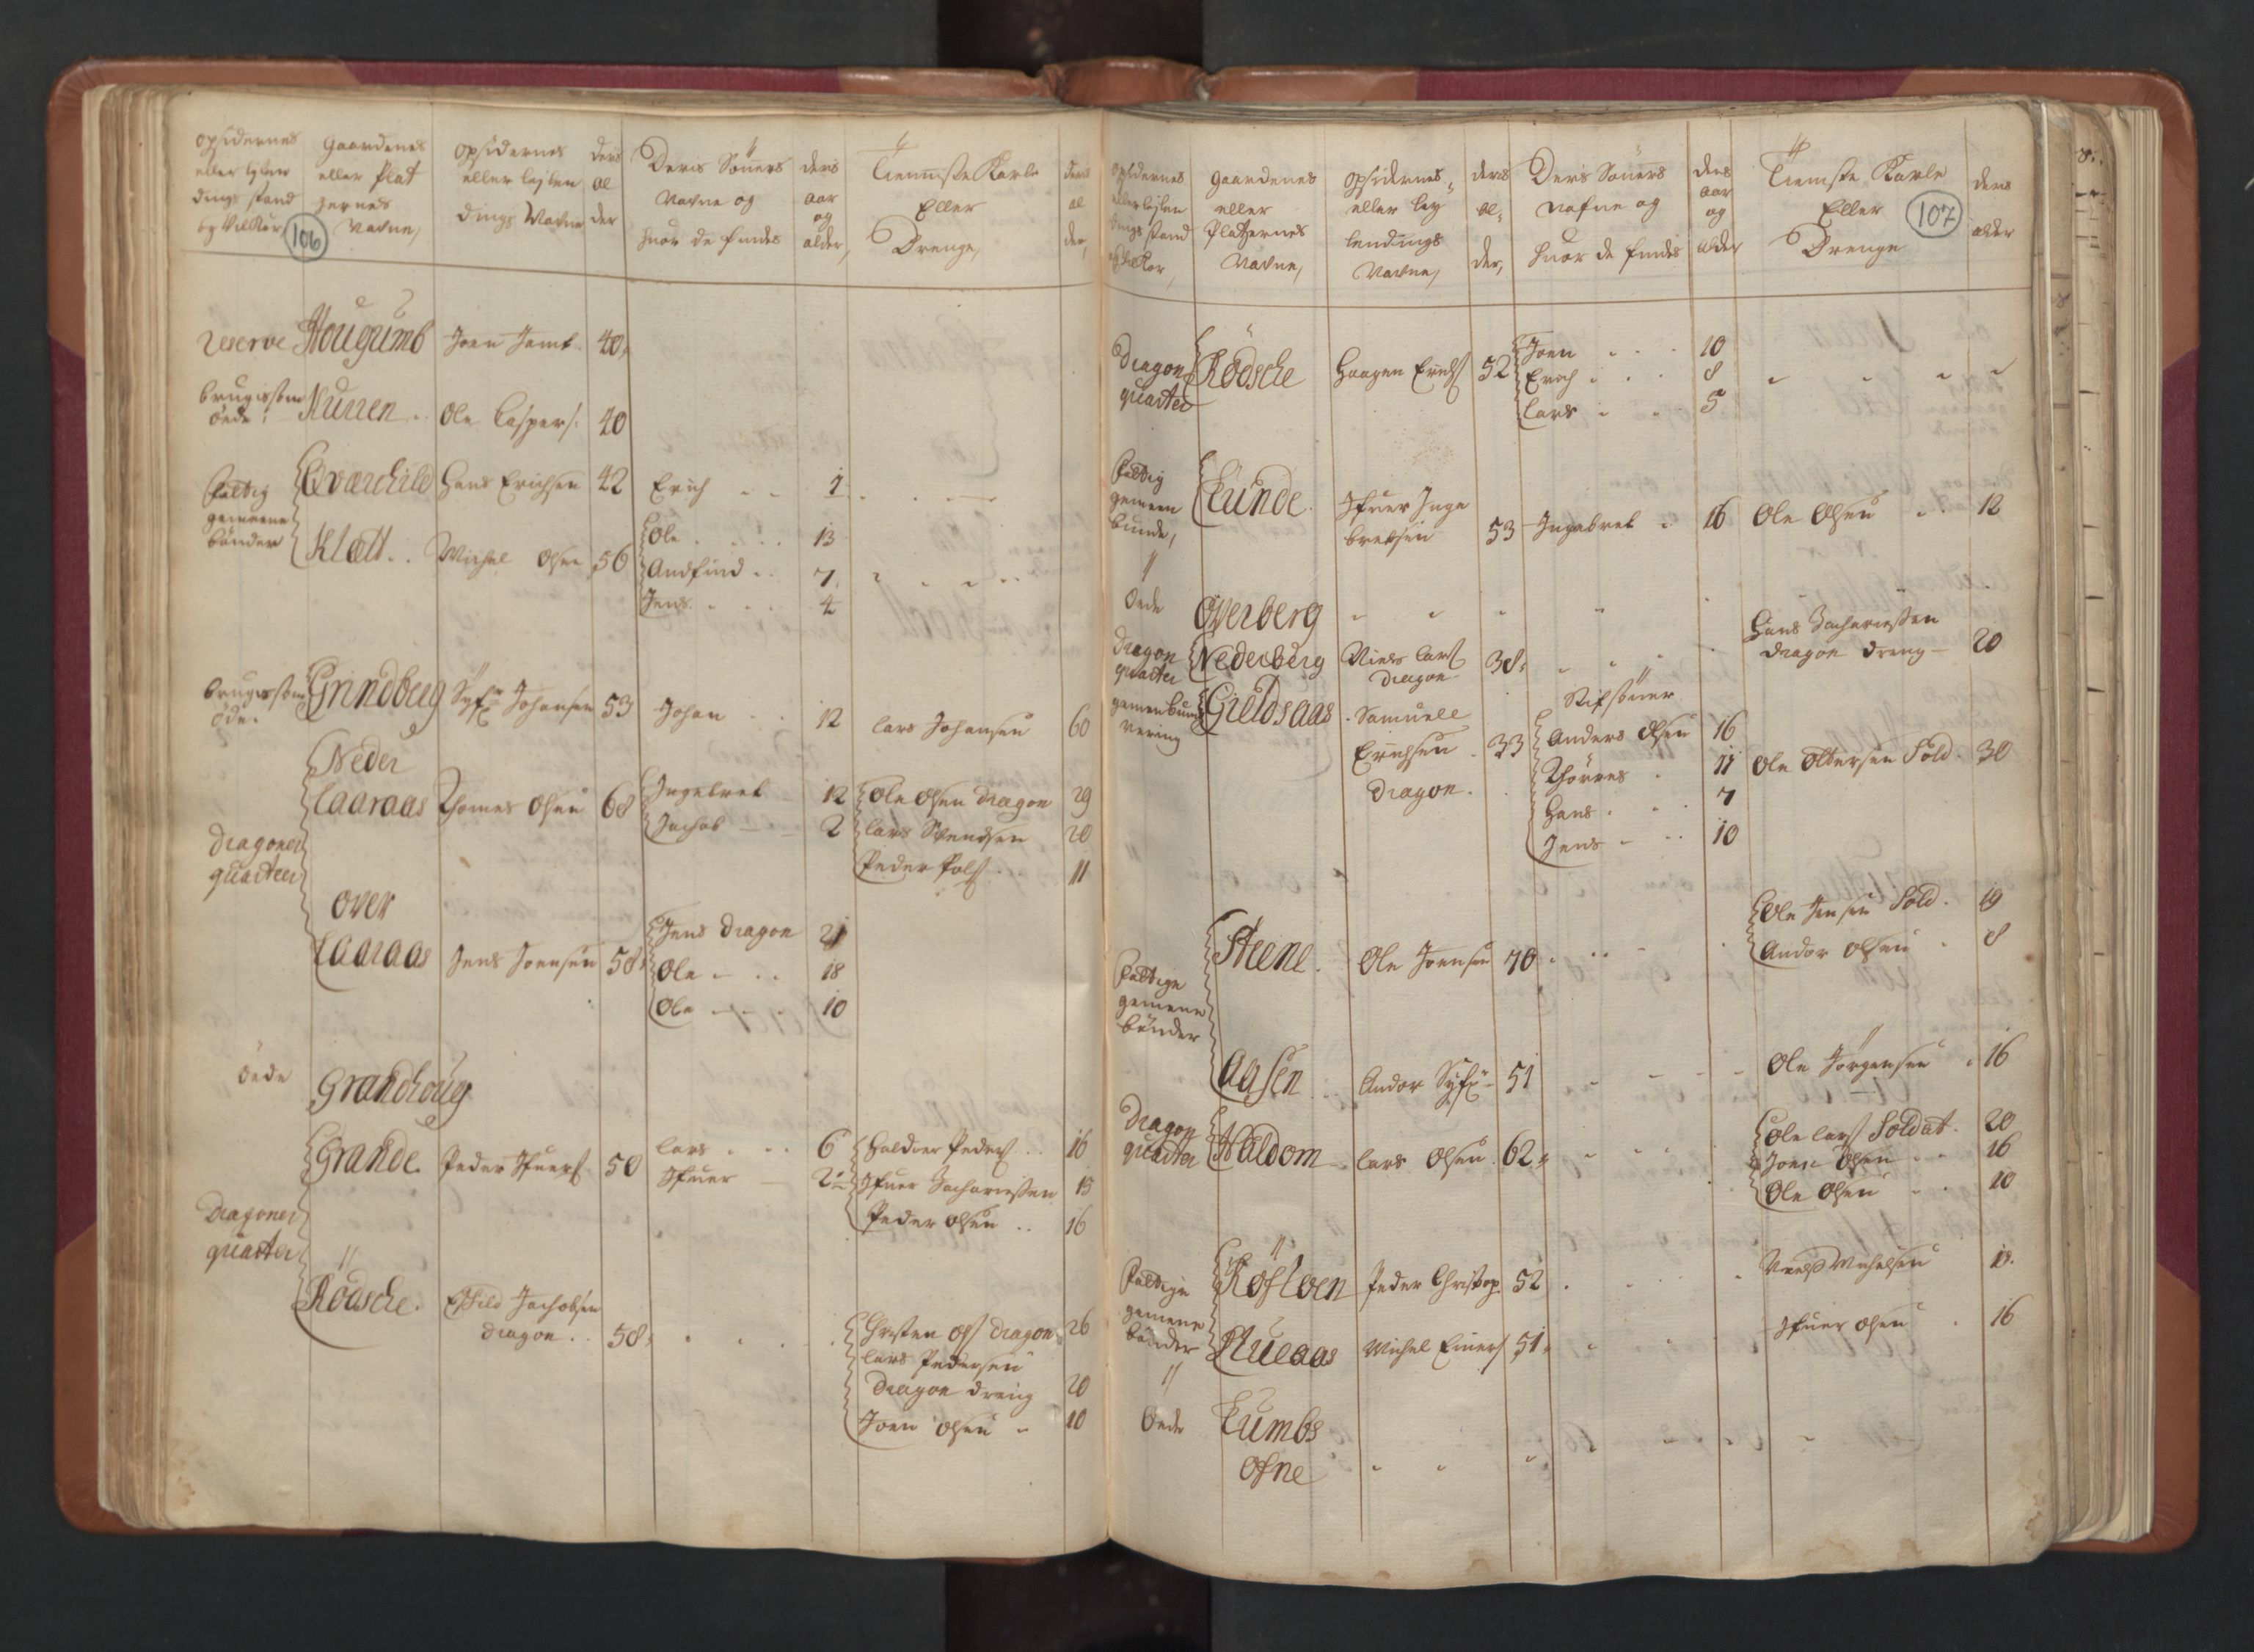 RA, Census (manntall) 1701, no. 15: Inderøy fogderi and Namdal fogderi, 1701, p. 106-107